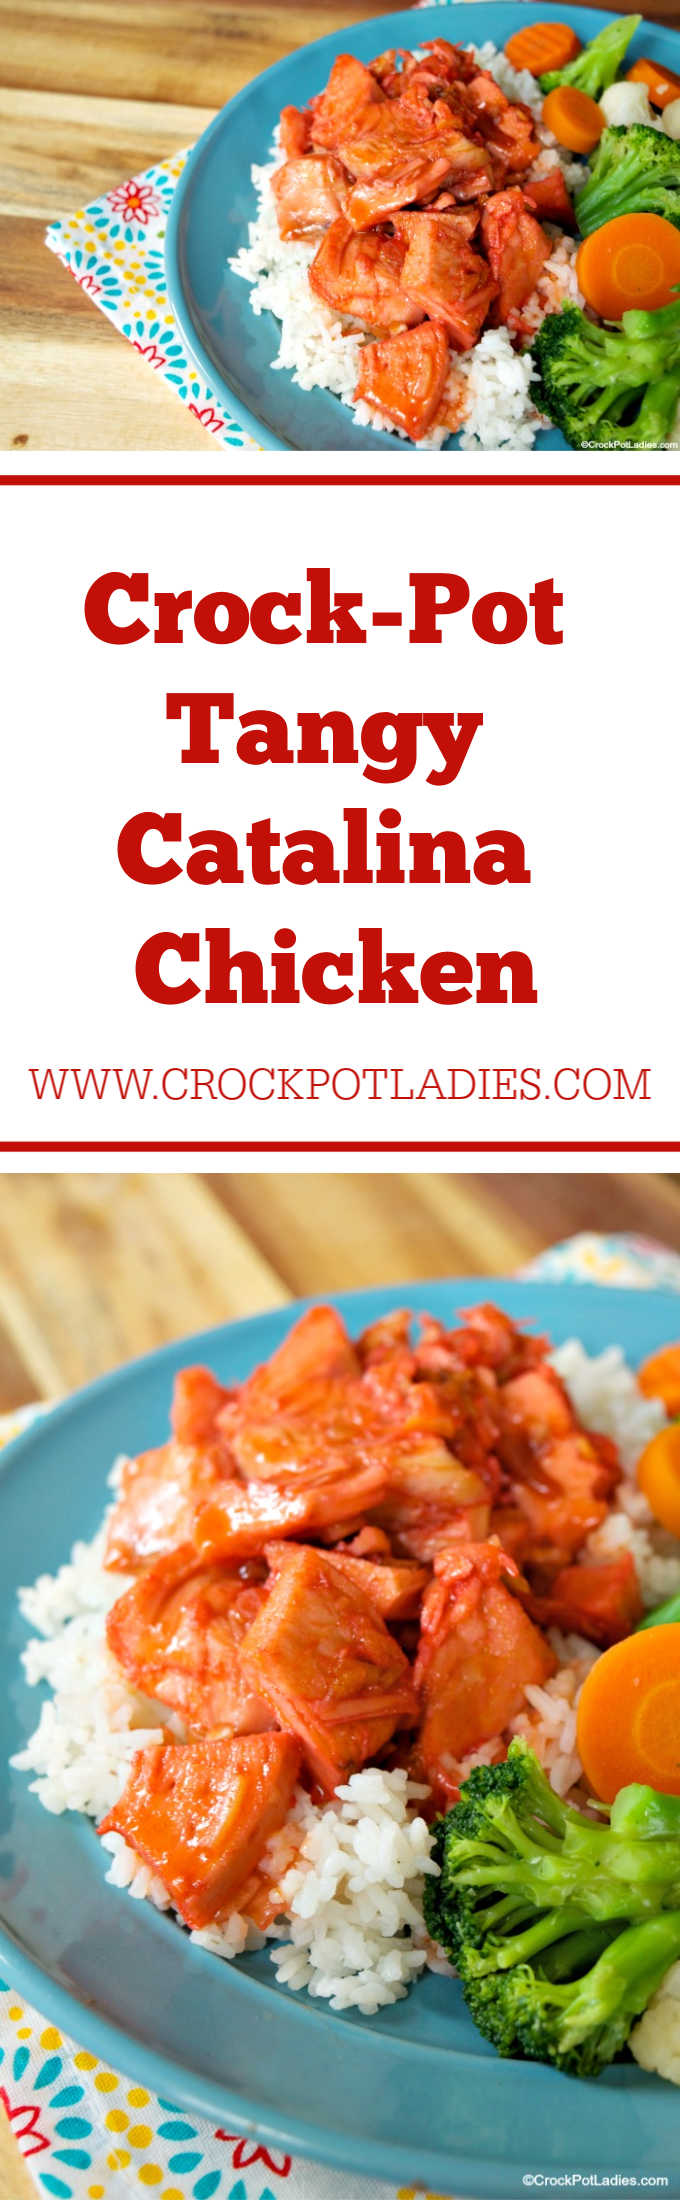 Crock-Pot Tangy Catalina Chicken